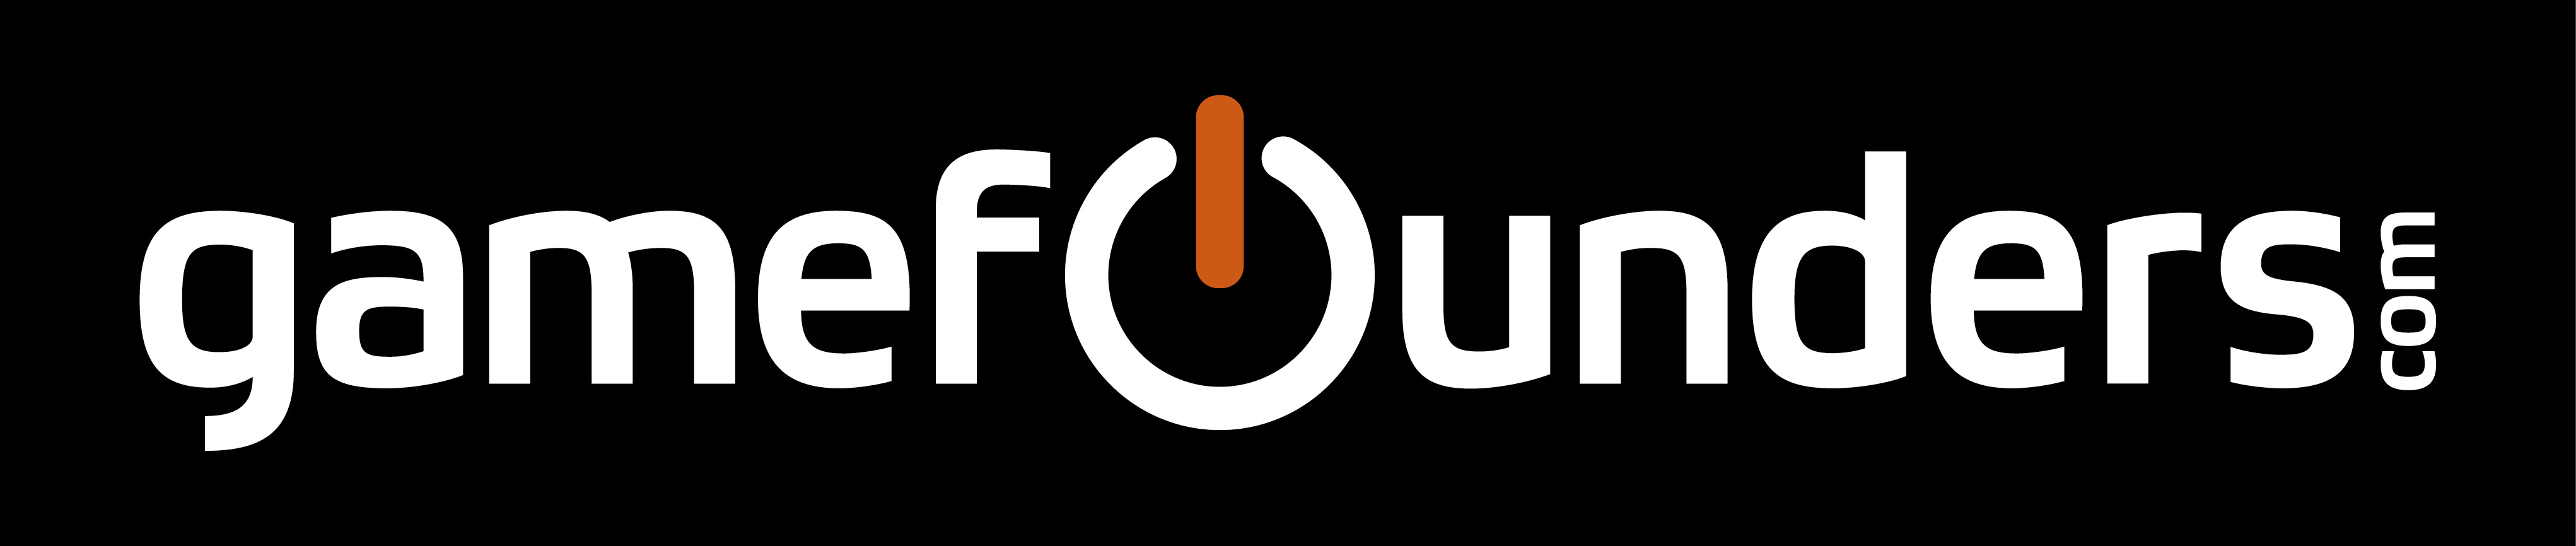 Gamefounders logo4